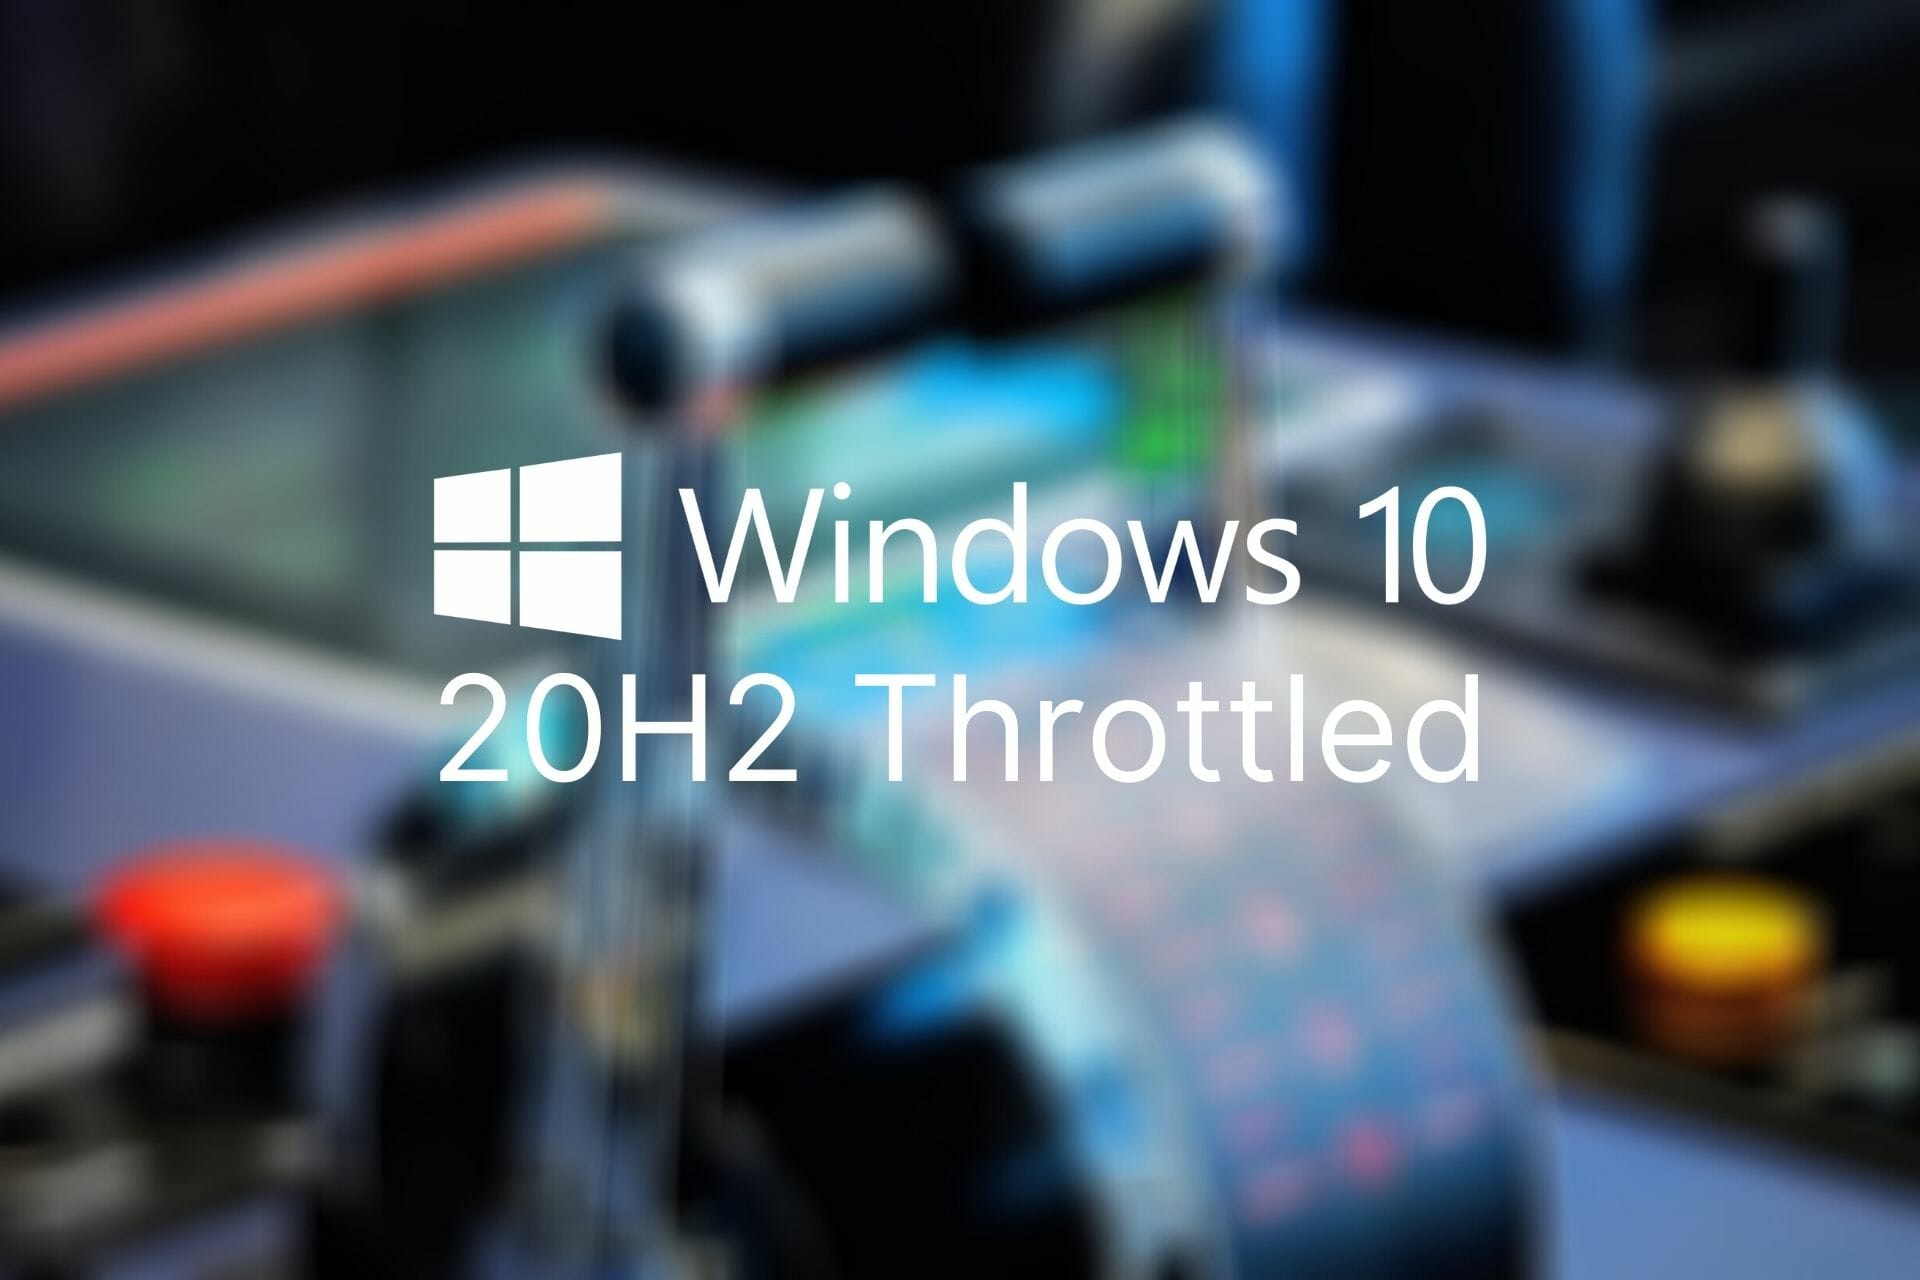 Windows 10 20H2 Throttled